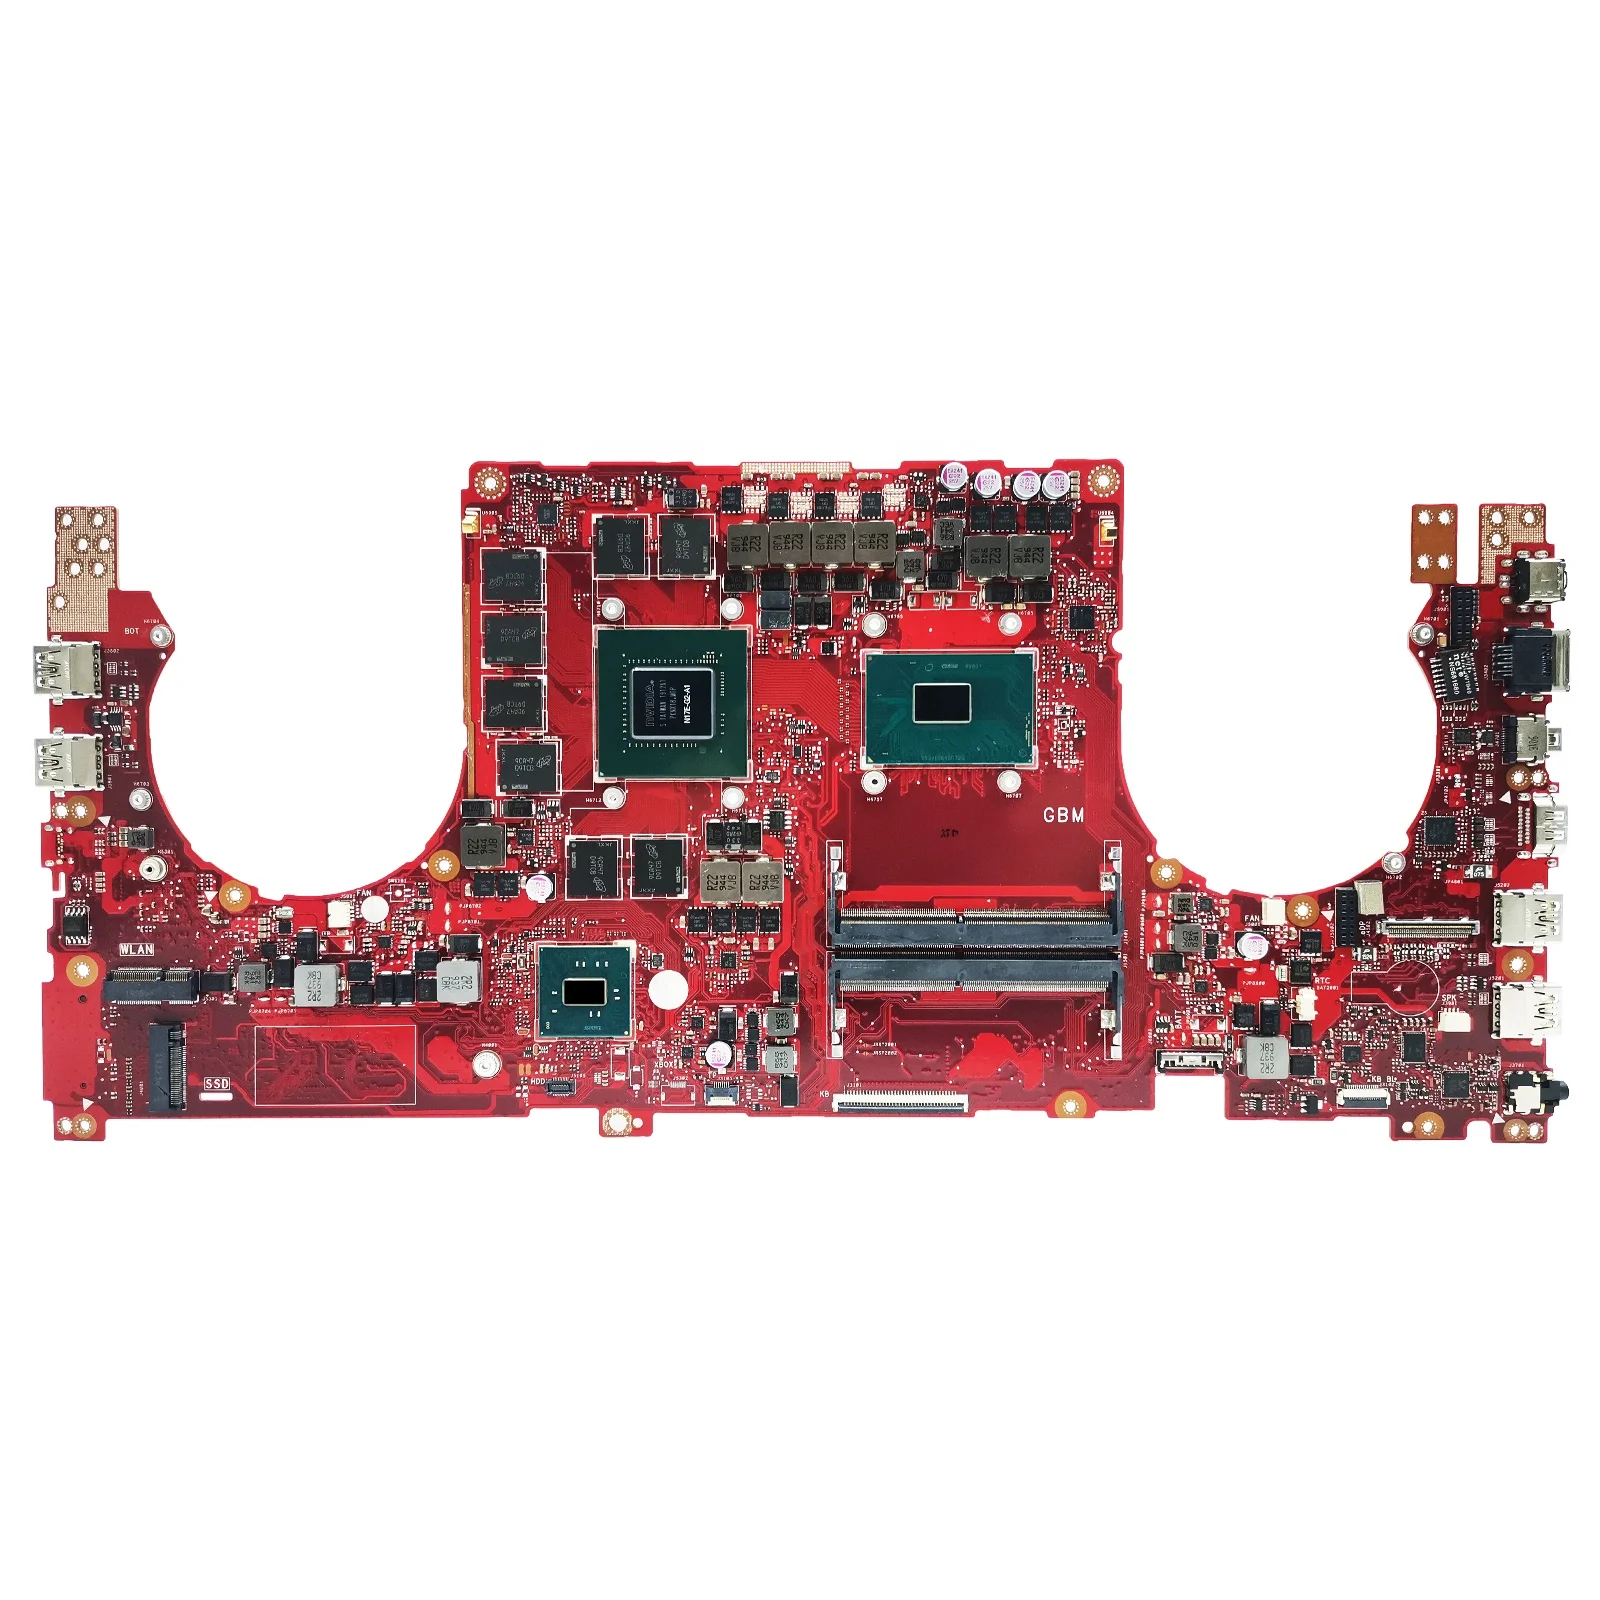 

S5AS Mainboard For ASUS ROG STRIX GL503VS Laptop Motherboard I5-7300HQ I7-7700HQ GTX1070/8G DDR4 MAIN BOARD TEST OK